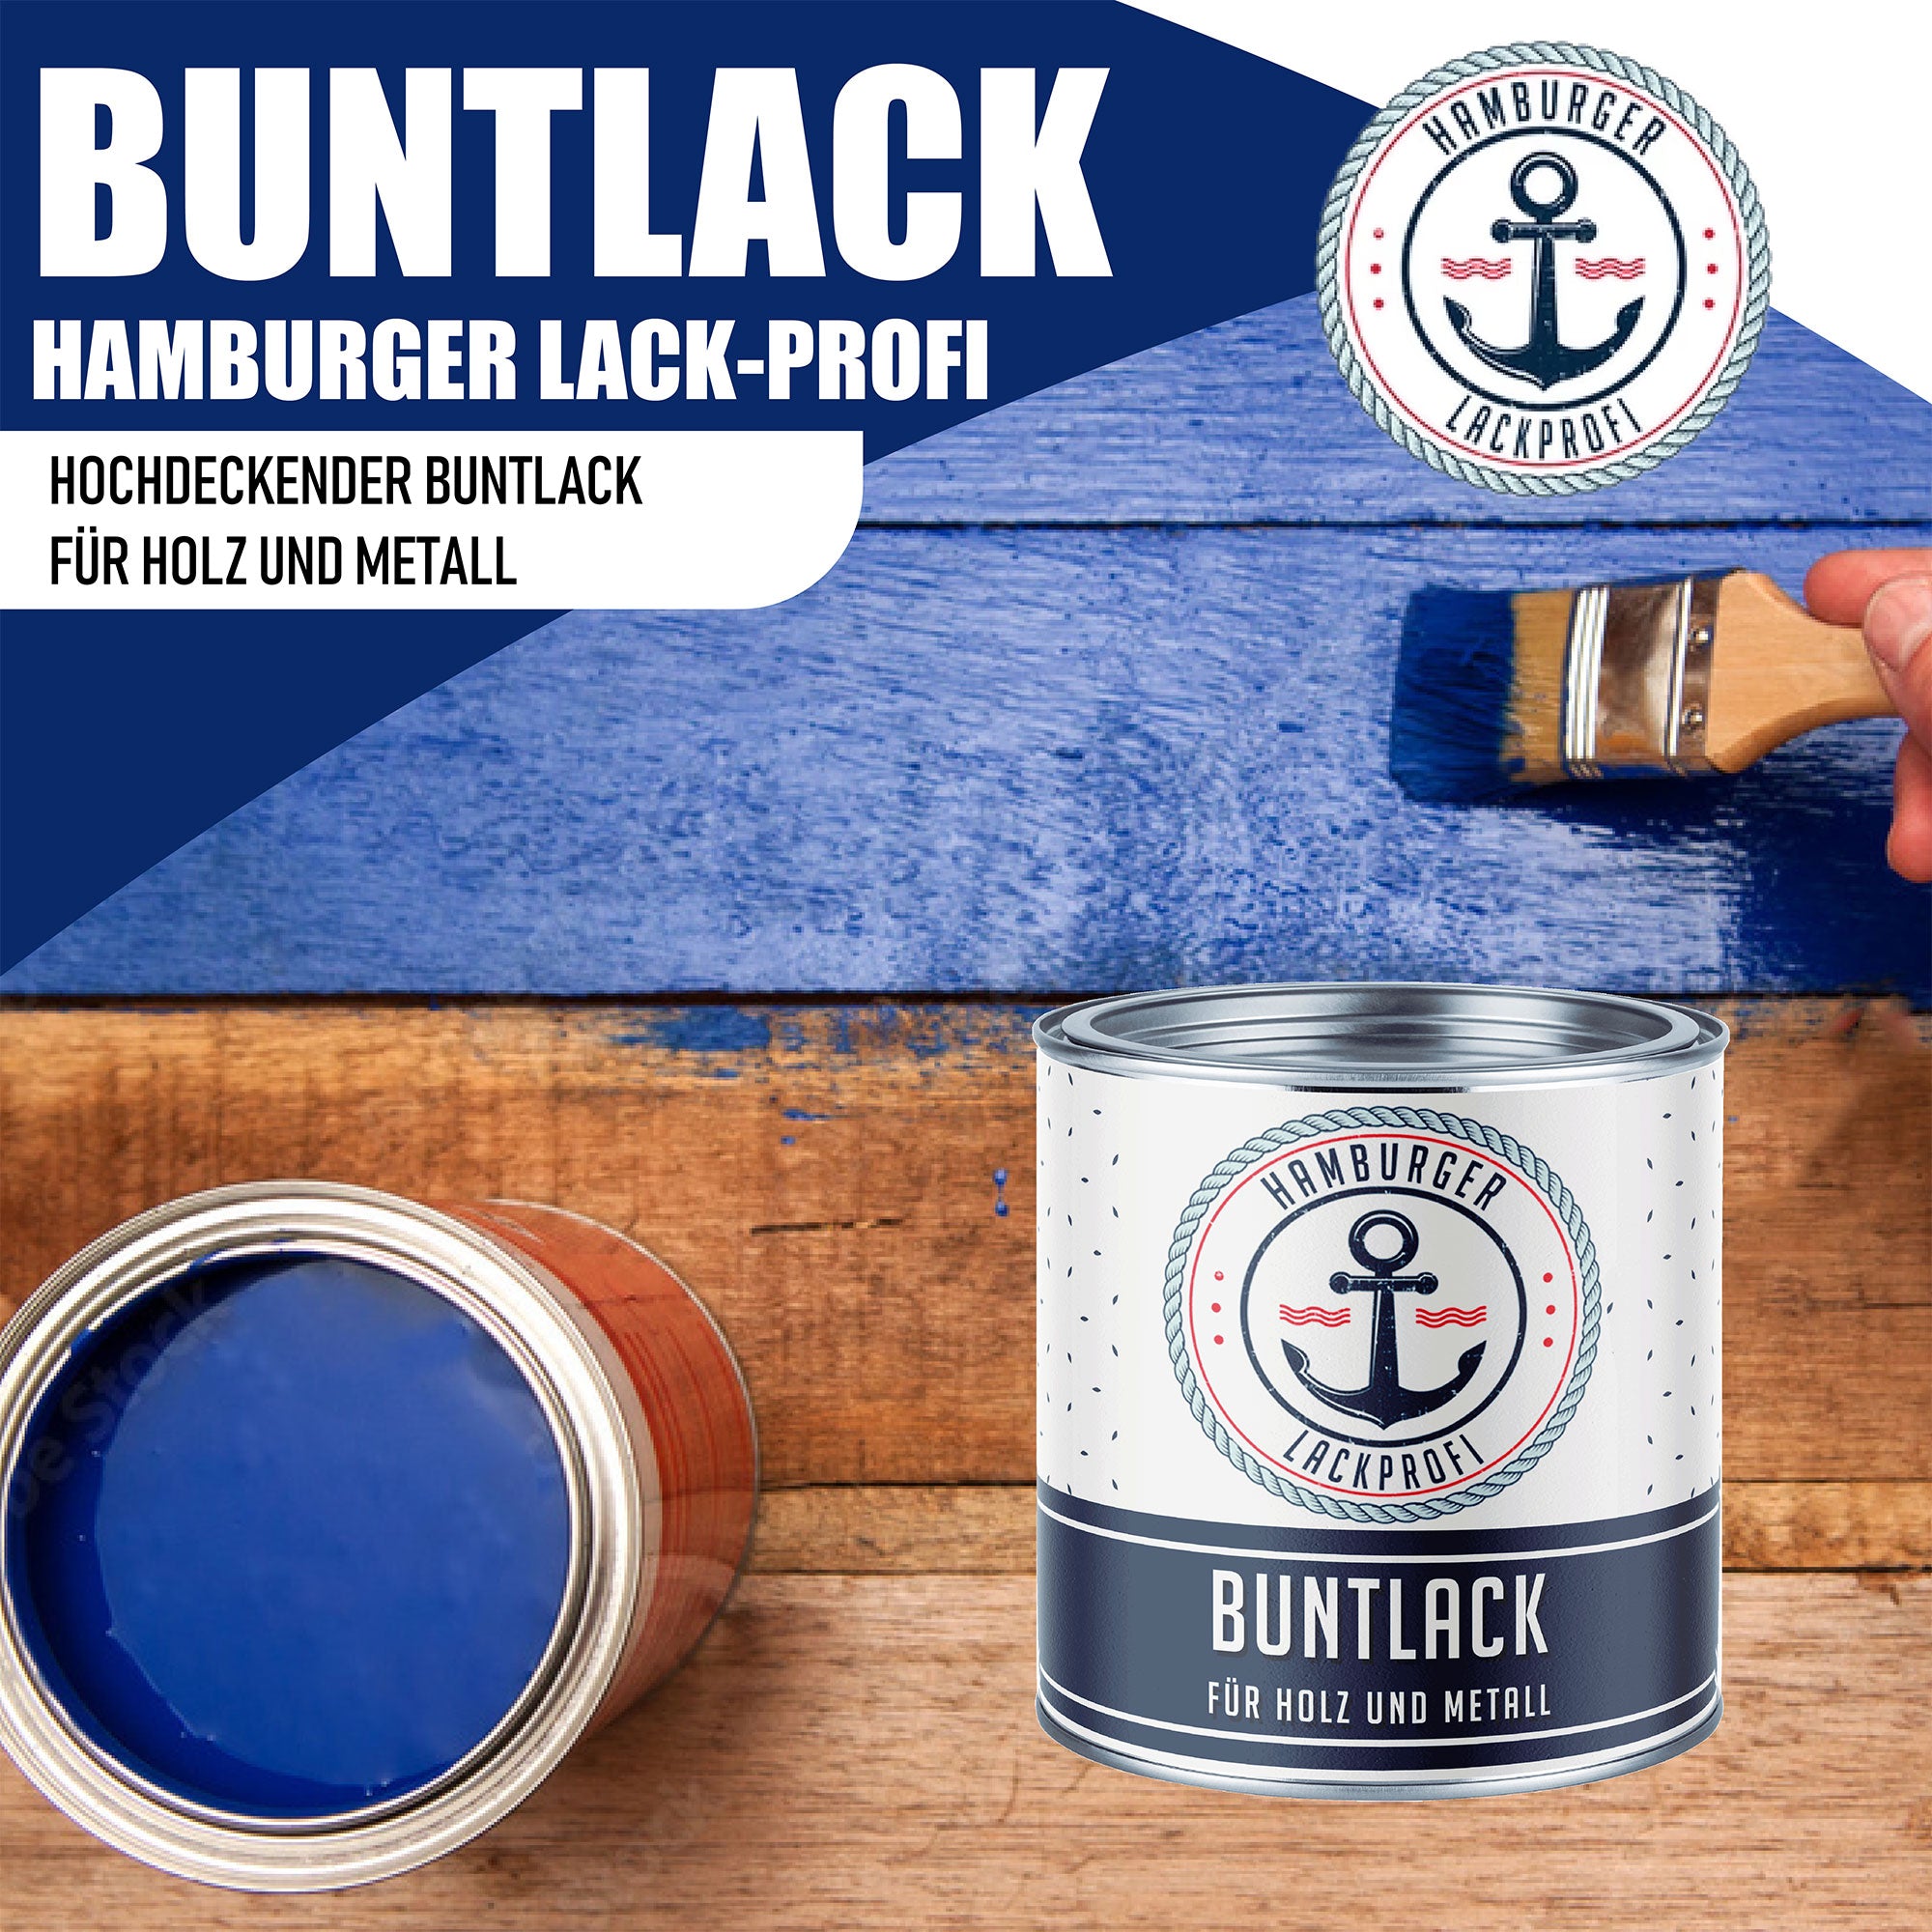 Hamburger Lack-Profi Buntlack in Zementgrau RAL 7033 mit Lackierset (X300) & Verdünnung (1 L) - 30% Sparangebot